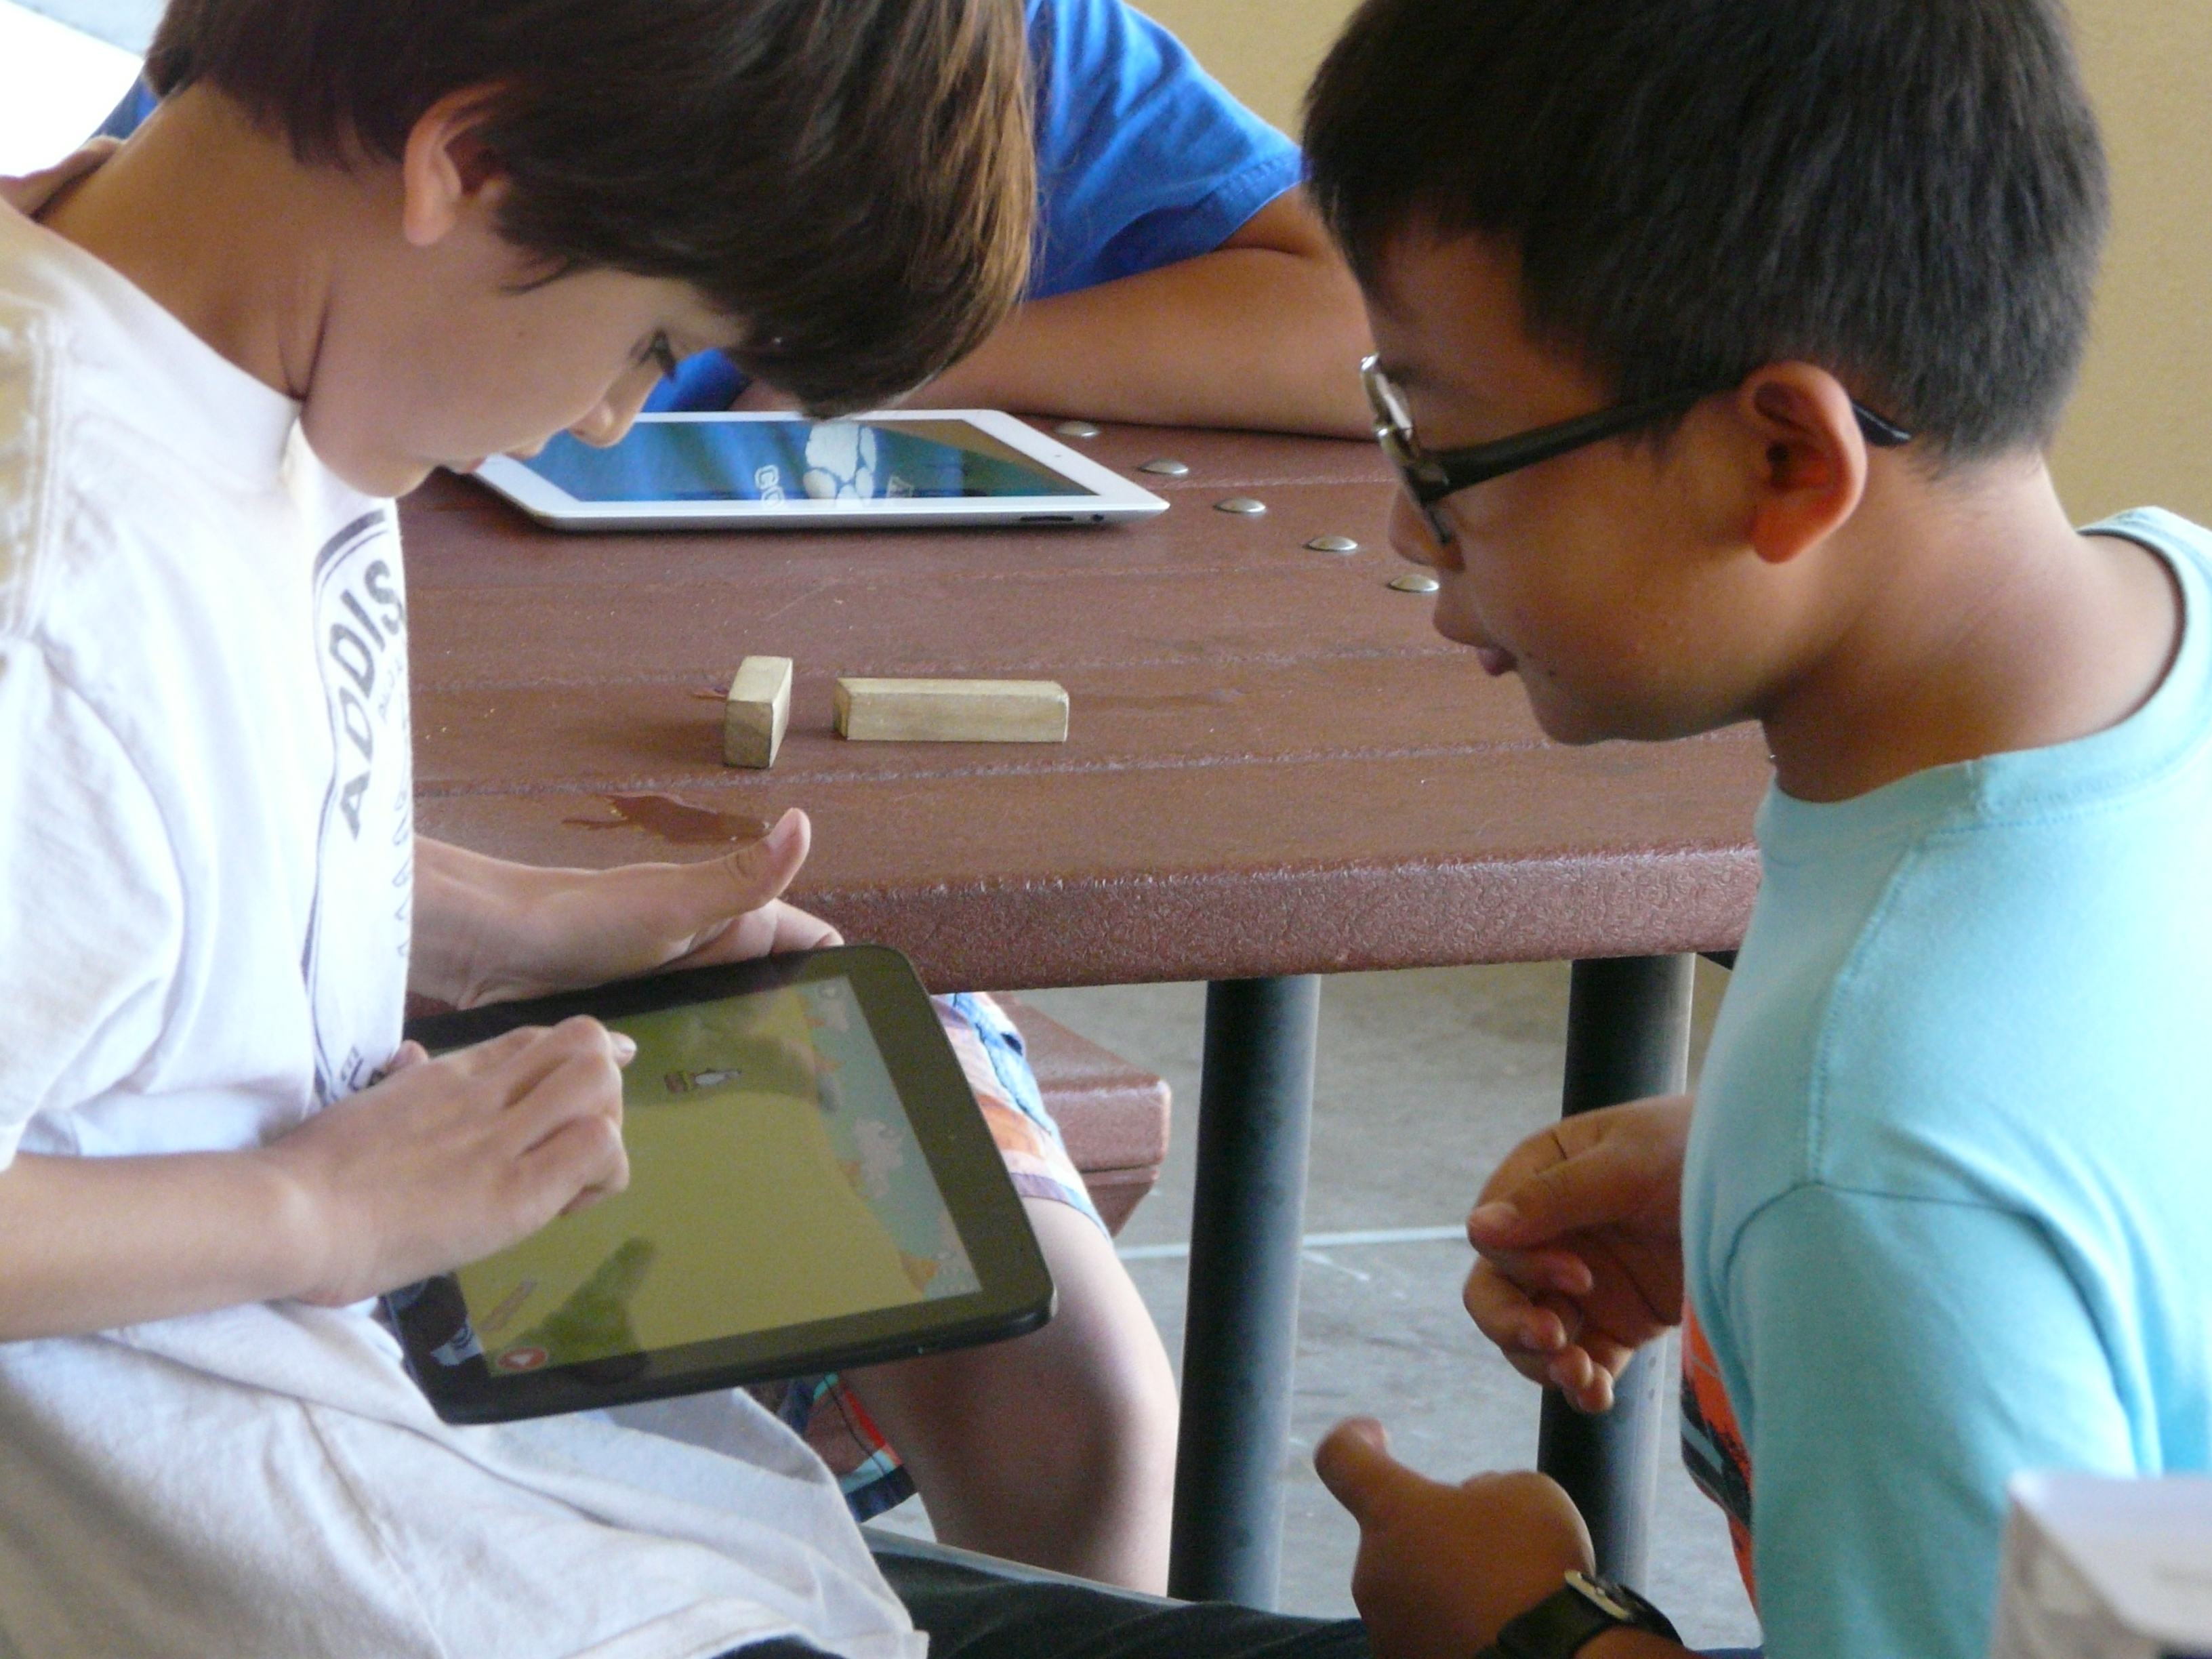 Boys Coding with Tynker on iPad